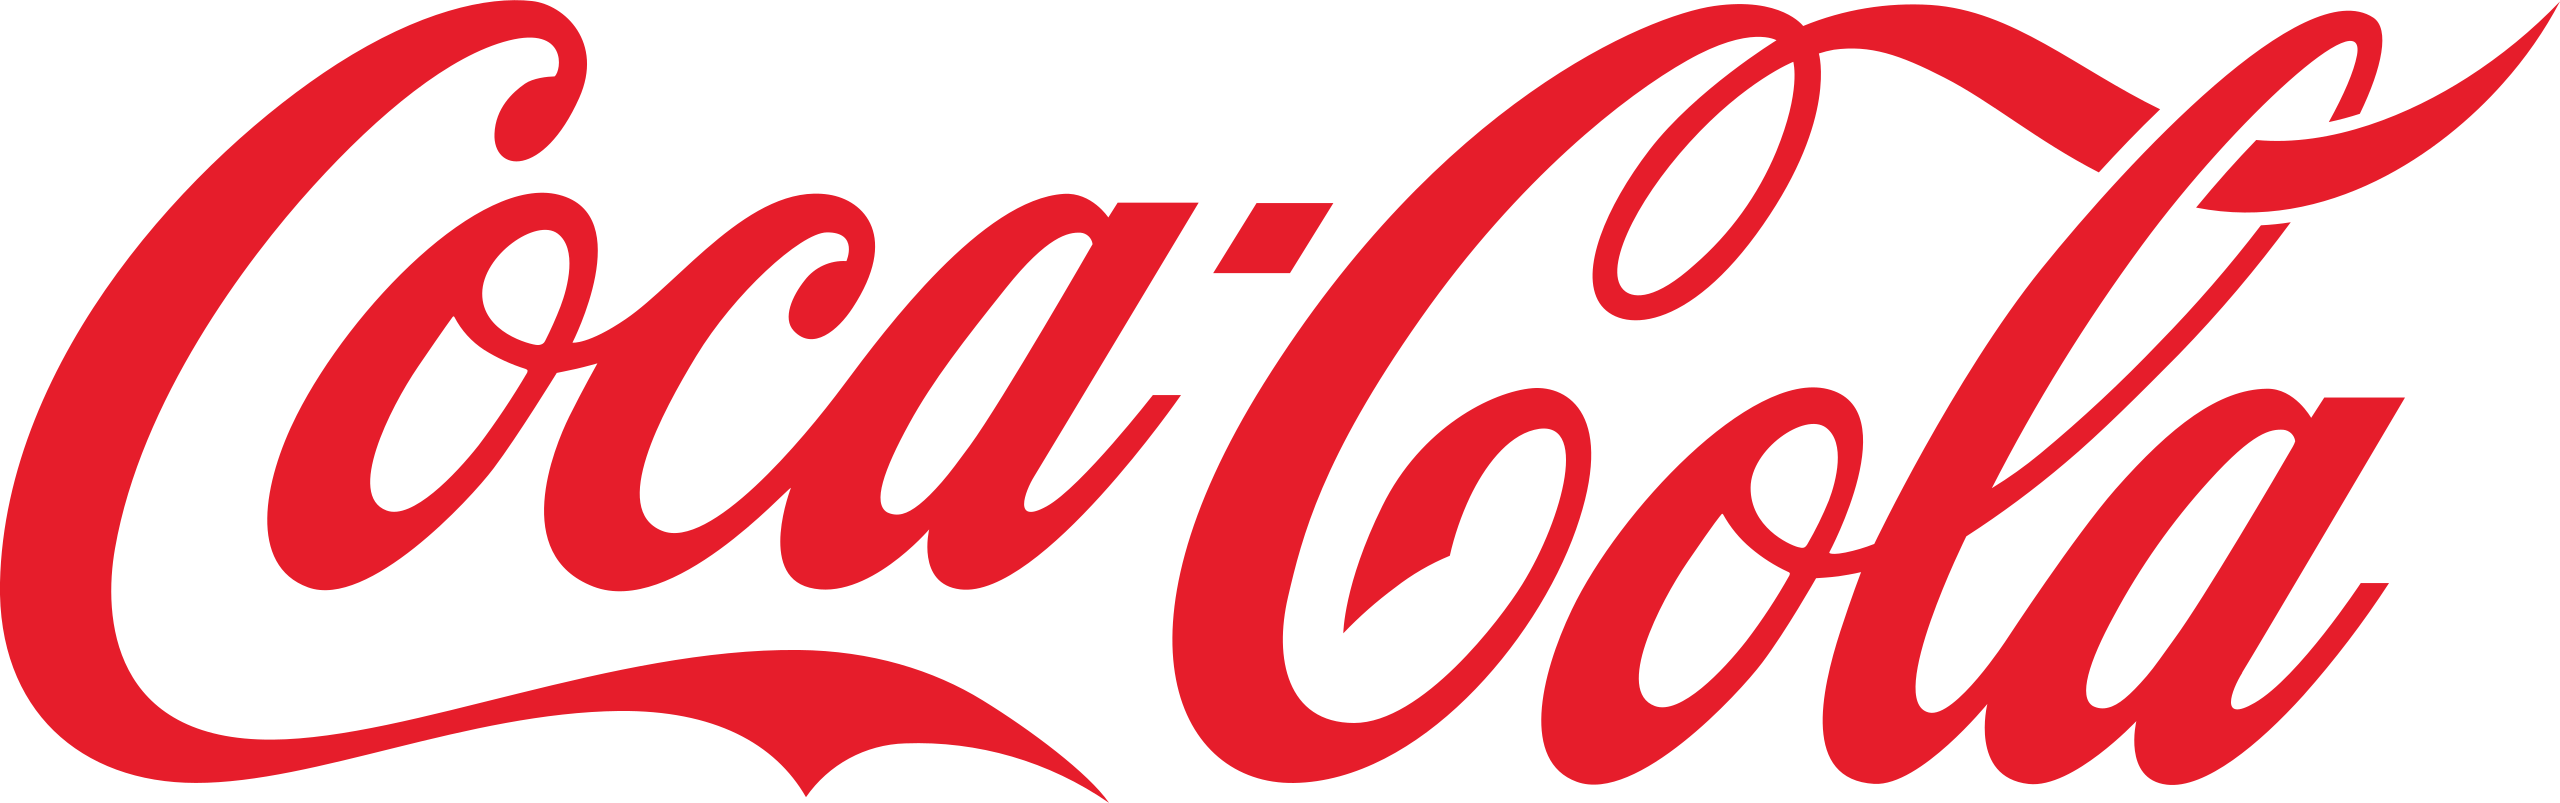 Coca Cola telefon